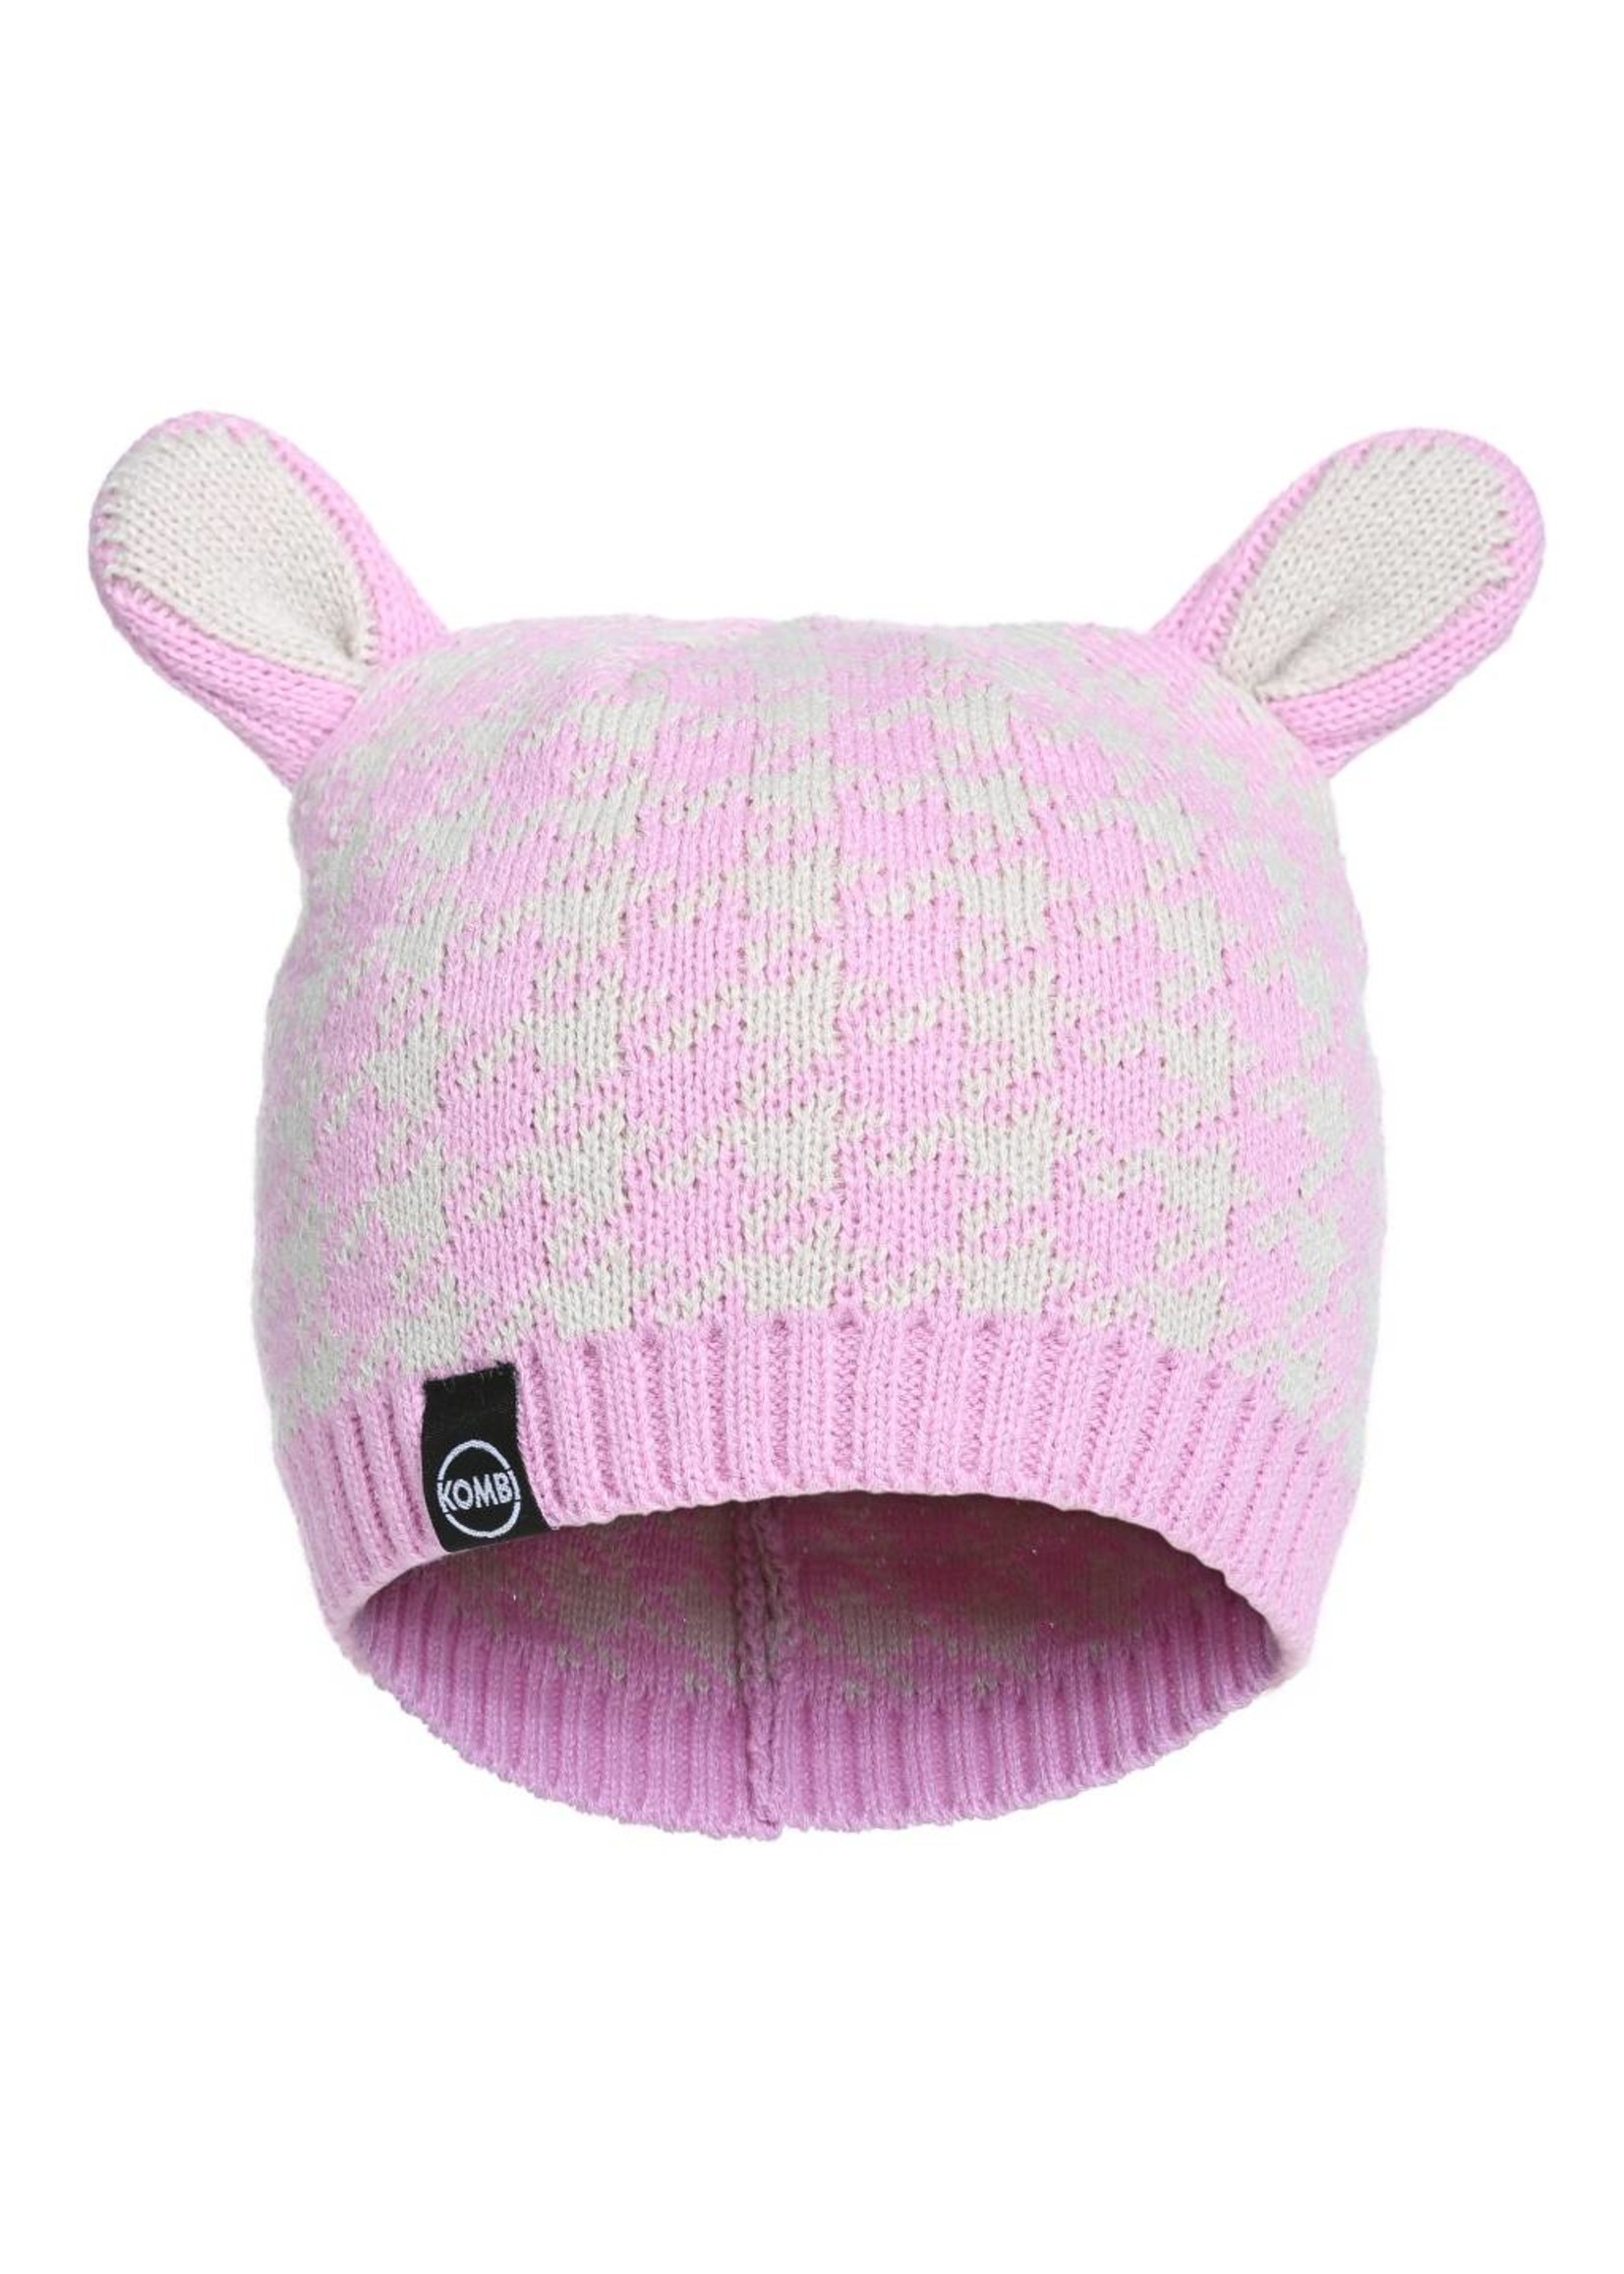 Kombi The Cutie Animal Ears Beanie Children's Pink Lavender